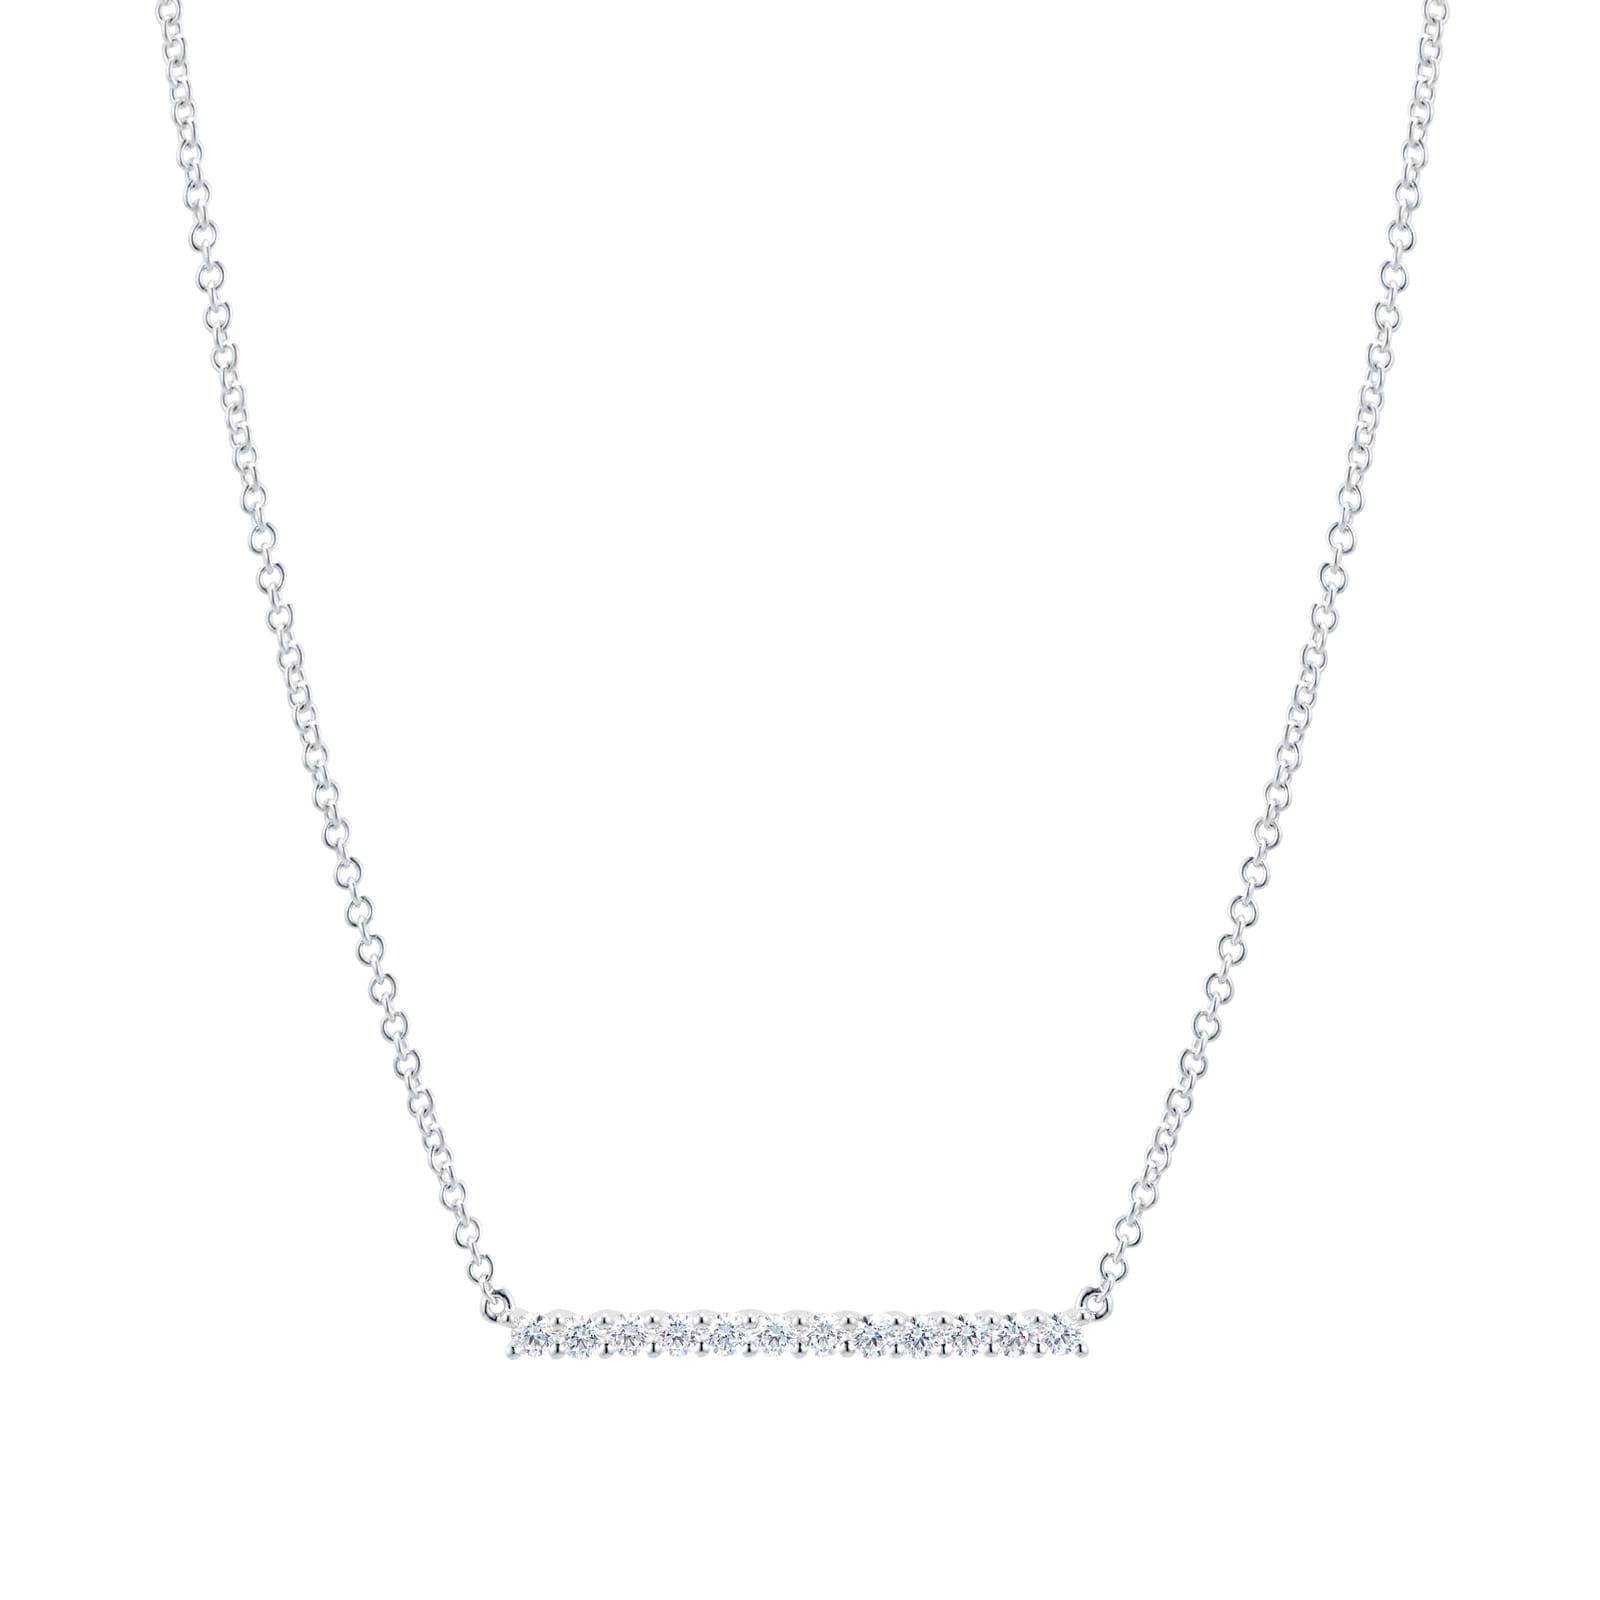 18kt white gold Rock chic diamond bar pendant necklace